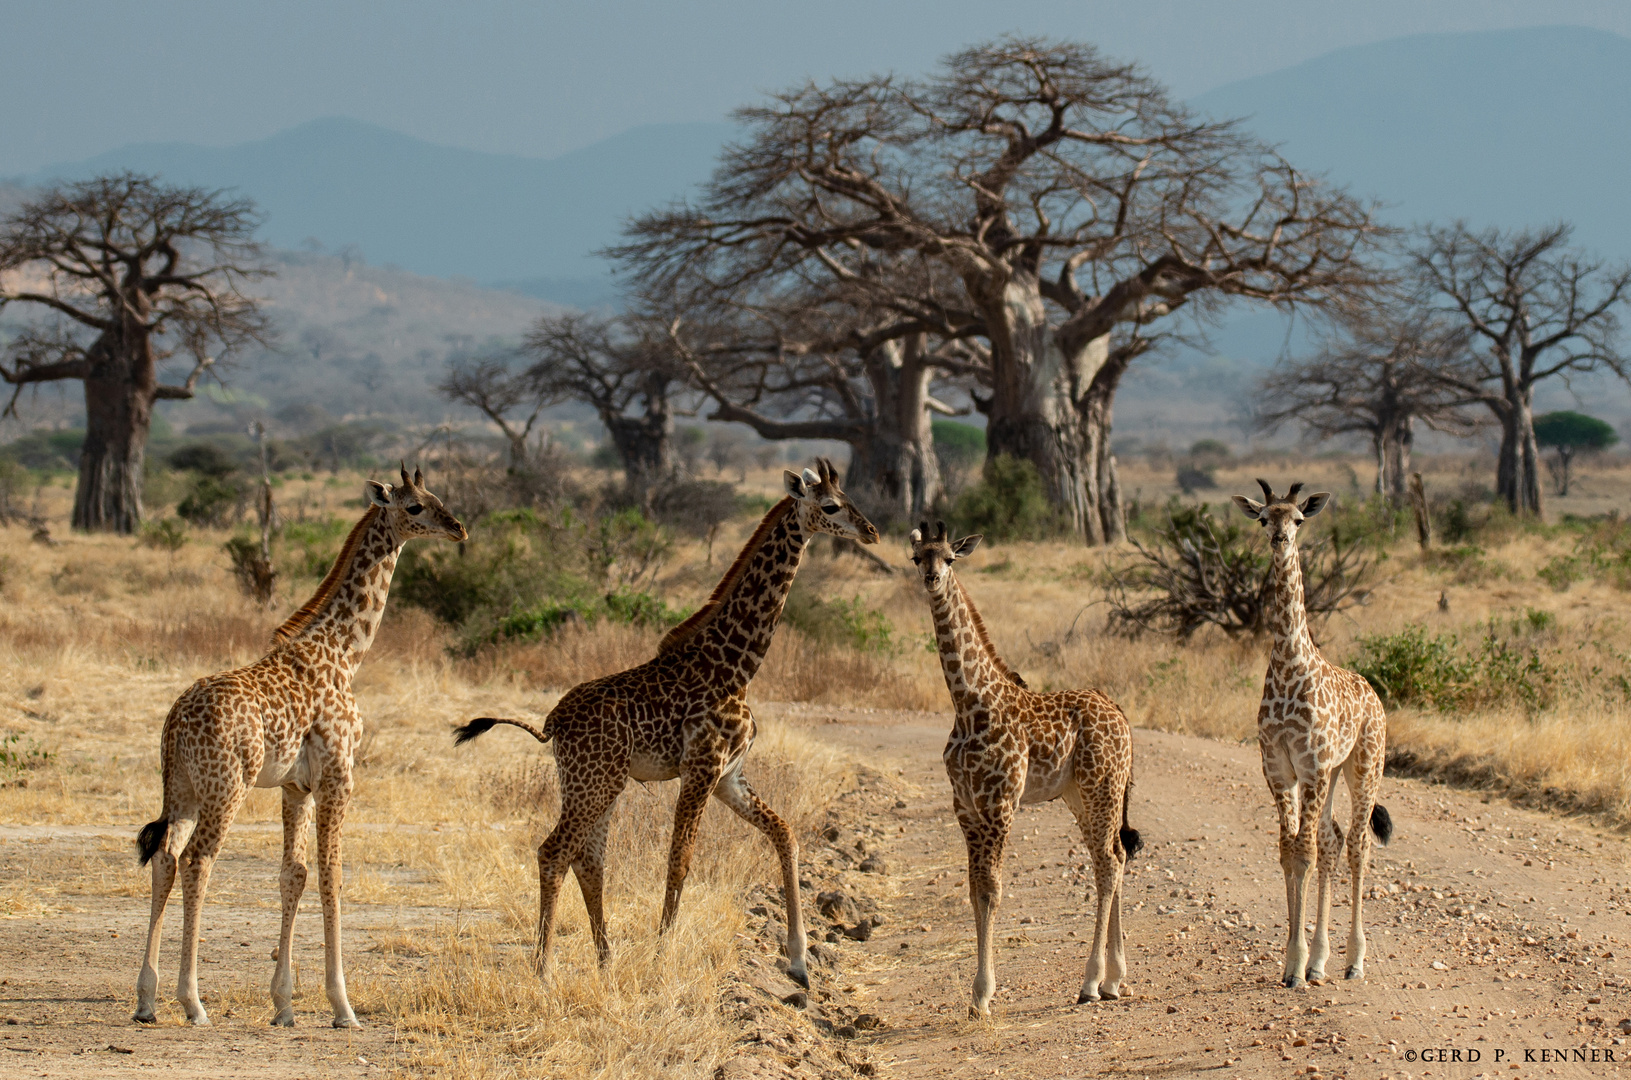 Giraffen am Zebrastreifen